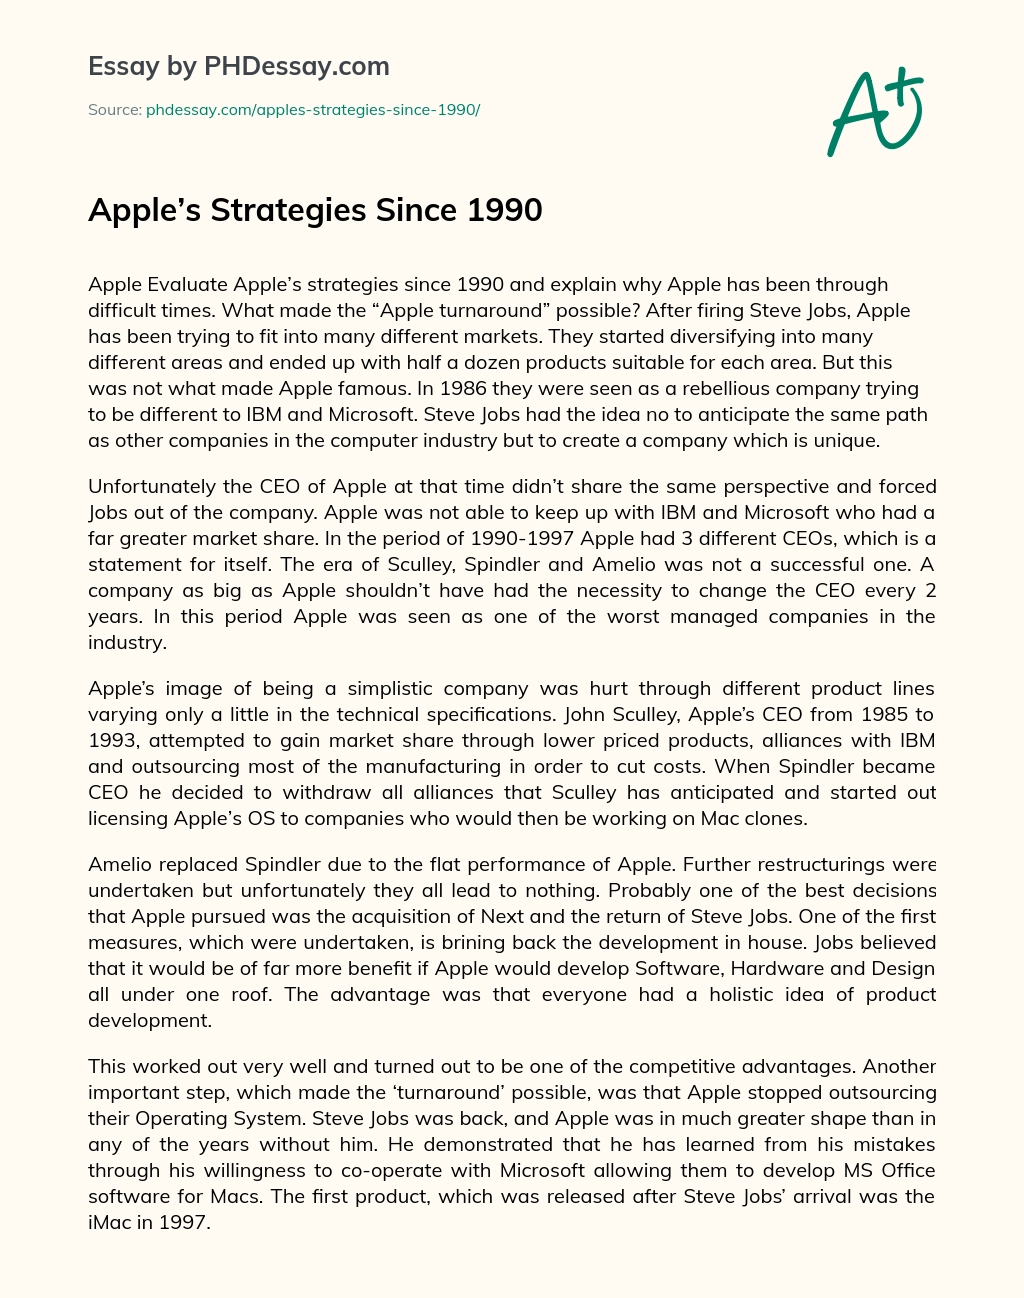 Apple’s Strategies Since 1990 essay